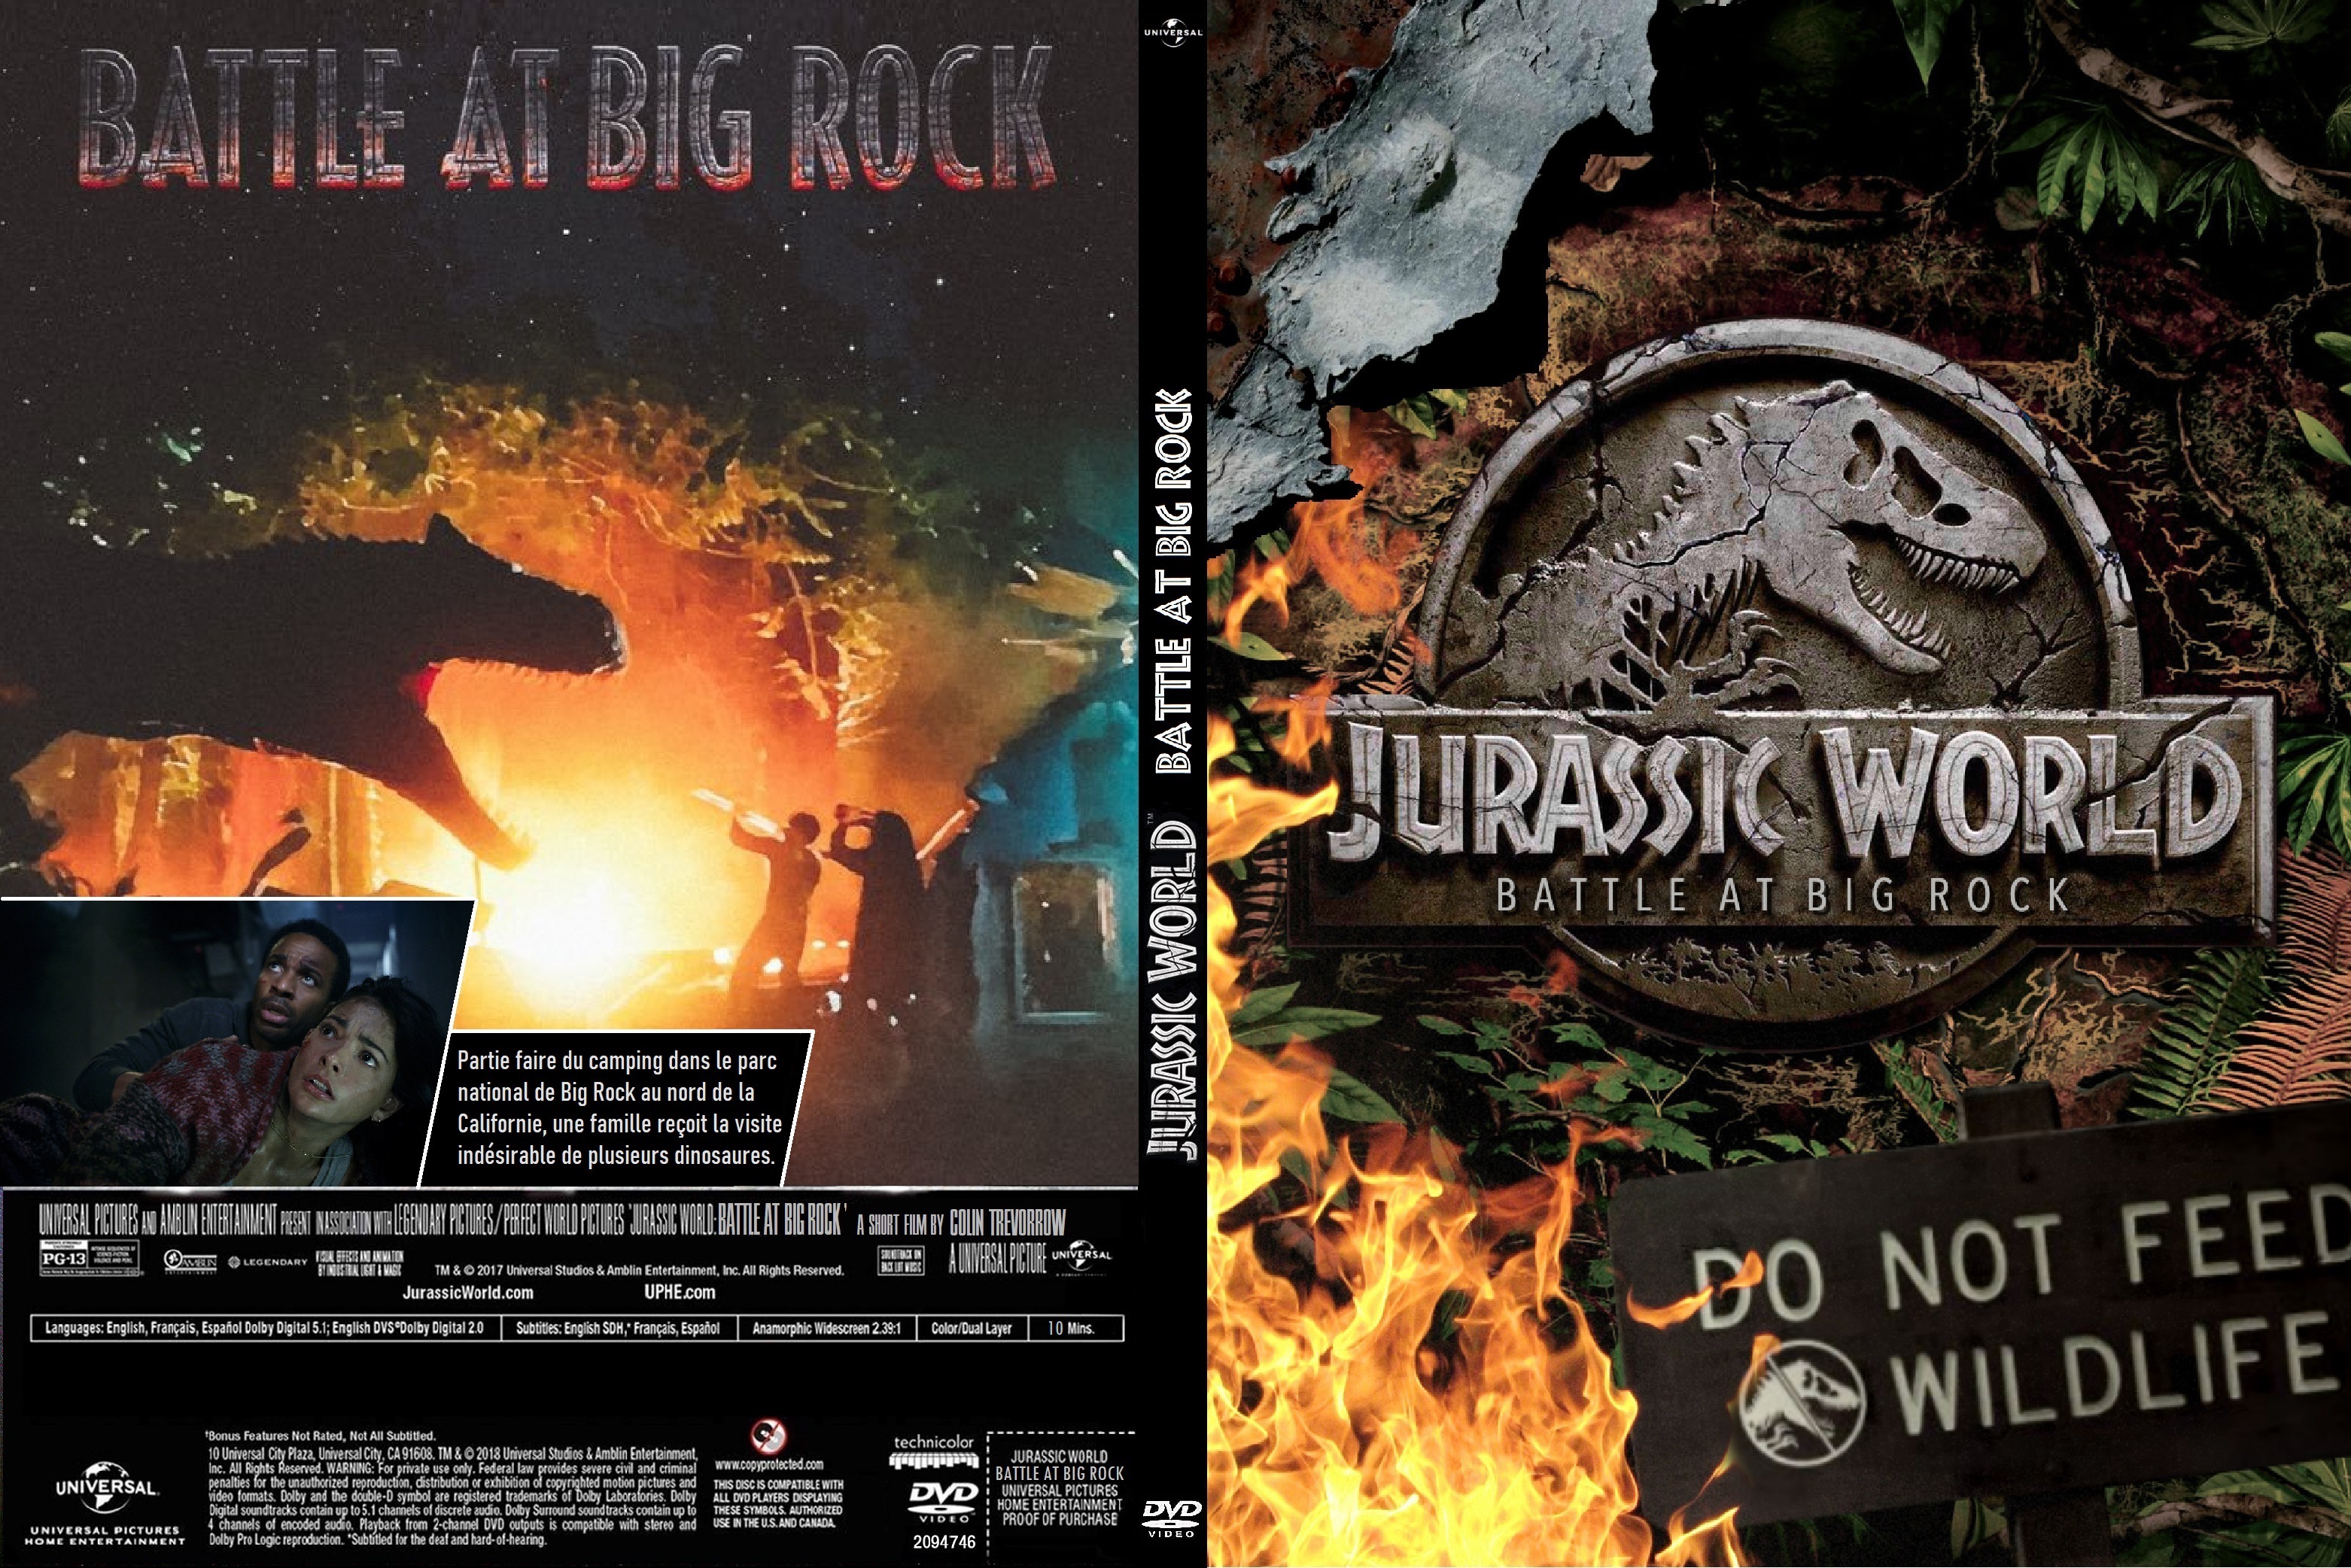 Jaquette DVD Jurassic World Battle at Big Rock custom